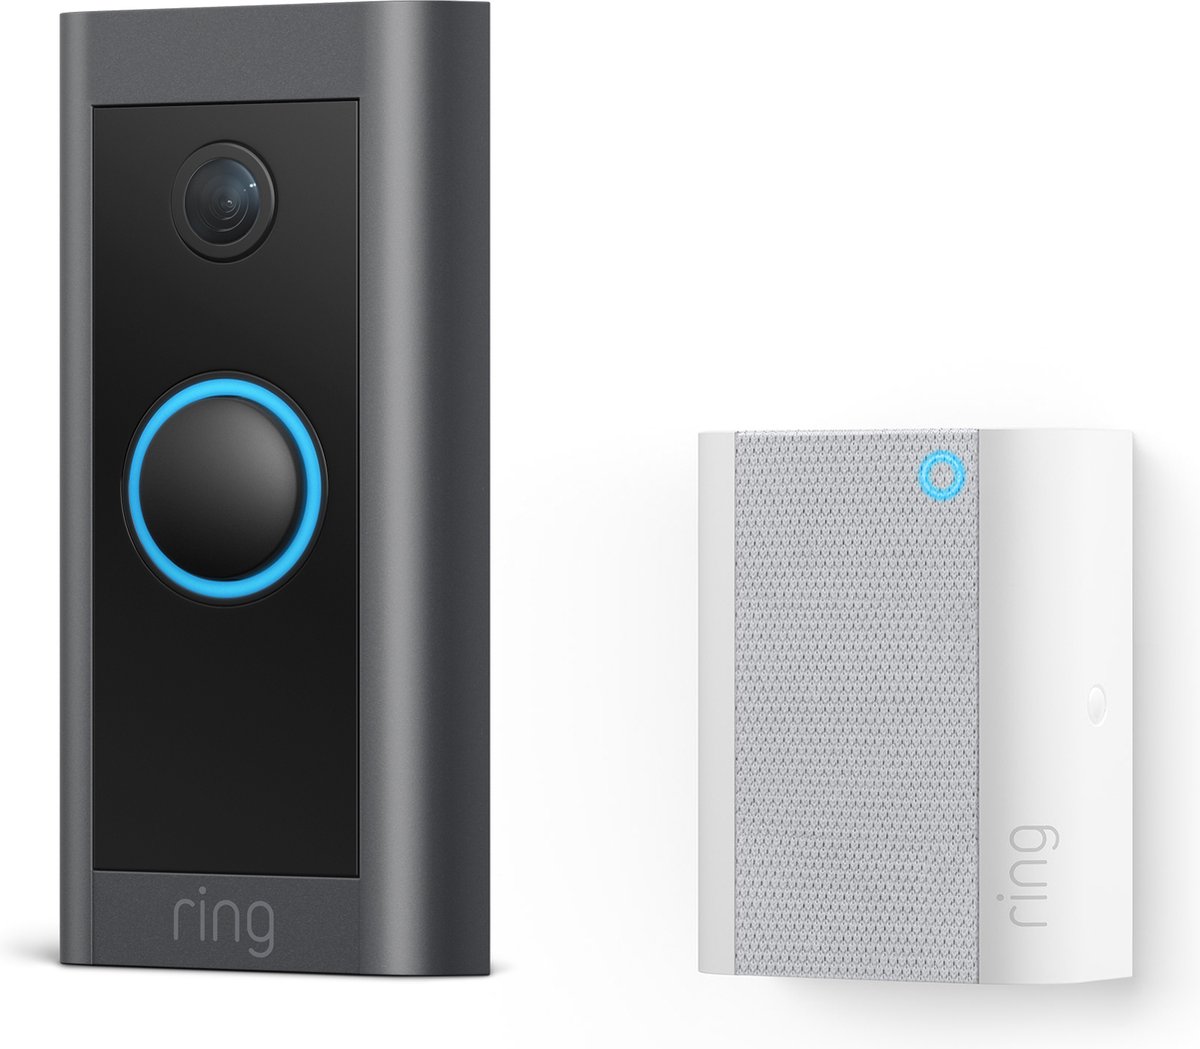 Hombli - Smart Doorbell - Sonnette connectée 1080p - Sonnette et